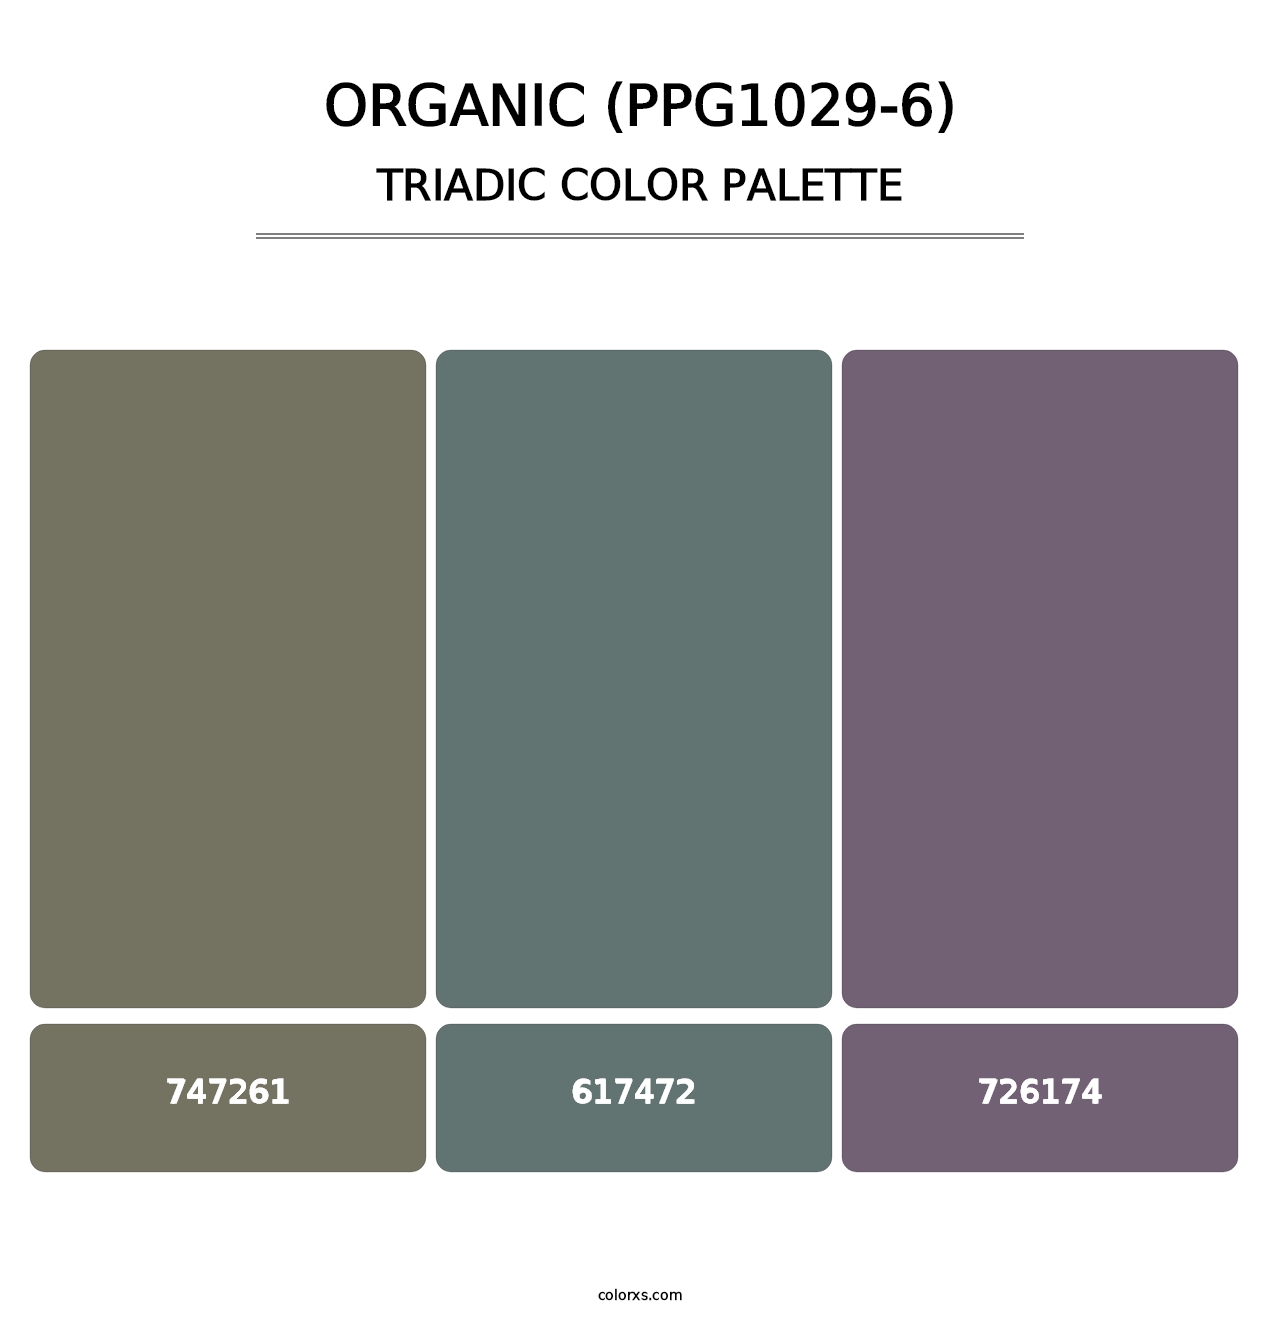 Organic (PPG1029-6) - Triadic Color Palette